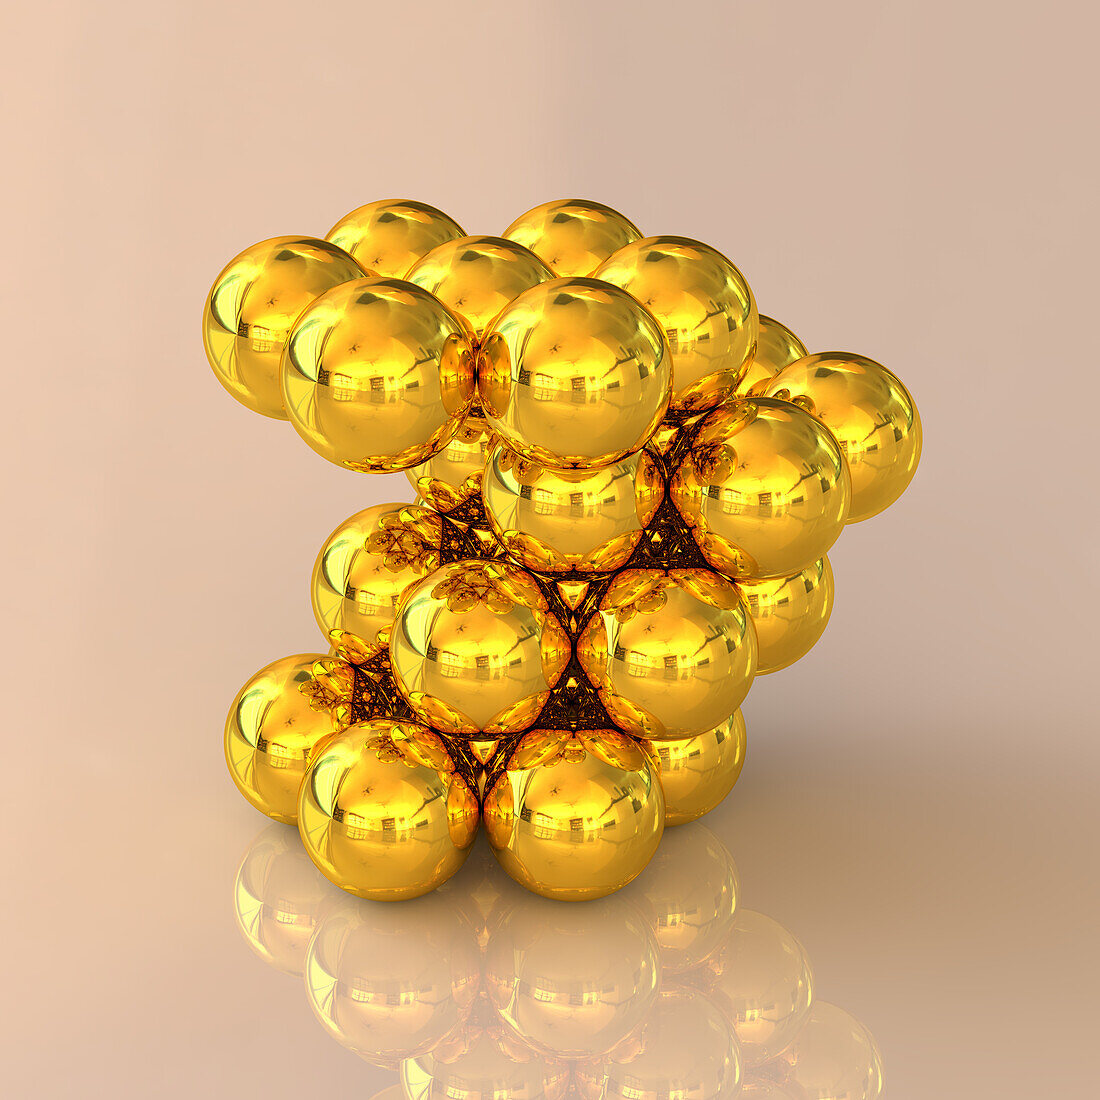 Gold crystal structure, illustration